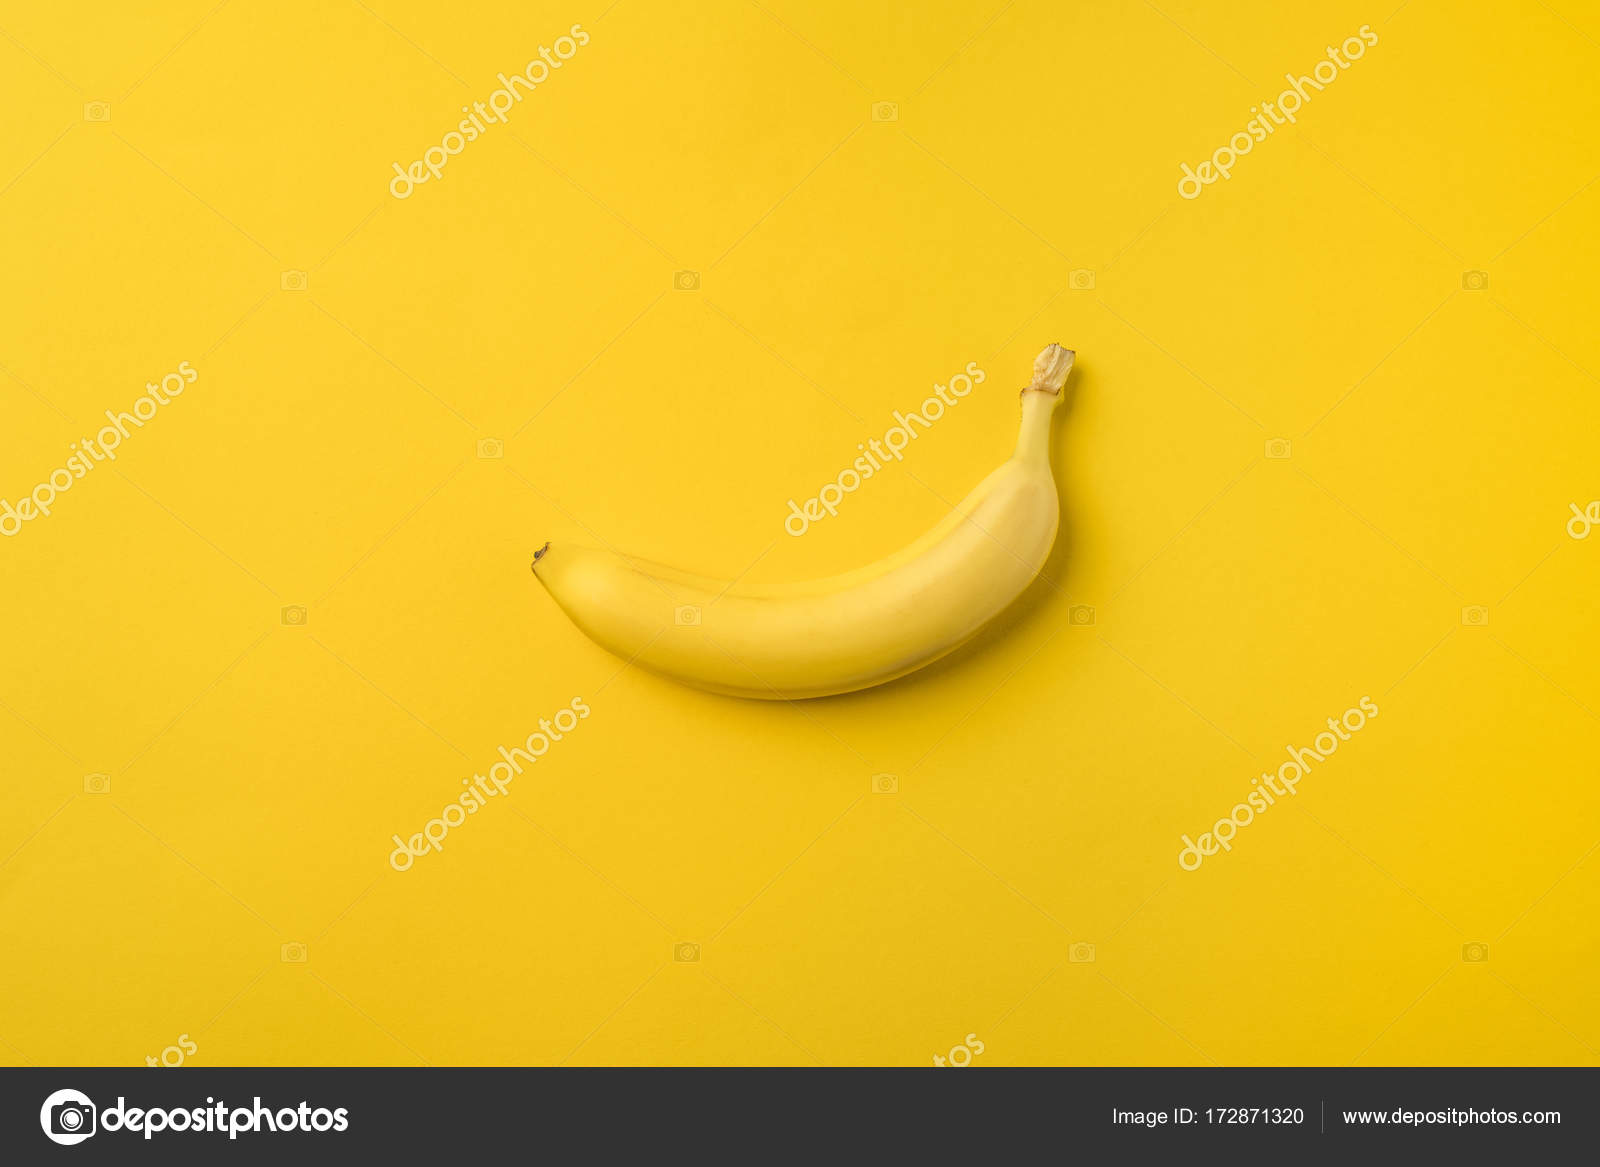 Banana | Banana — Stock Photo © AntonMatyukha #172871320